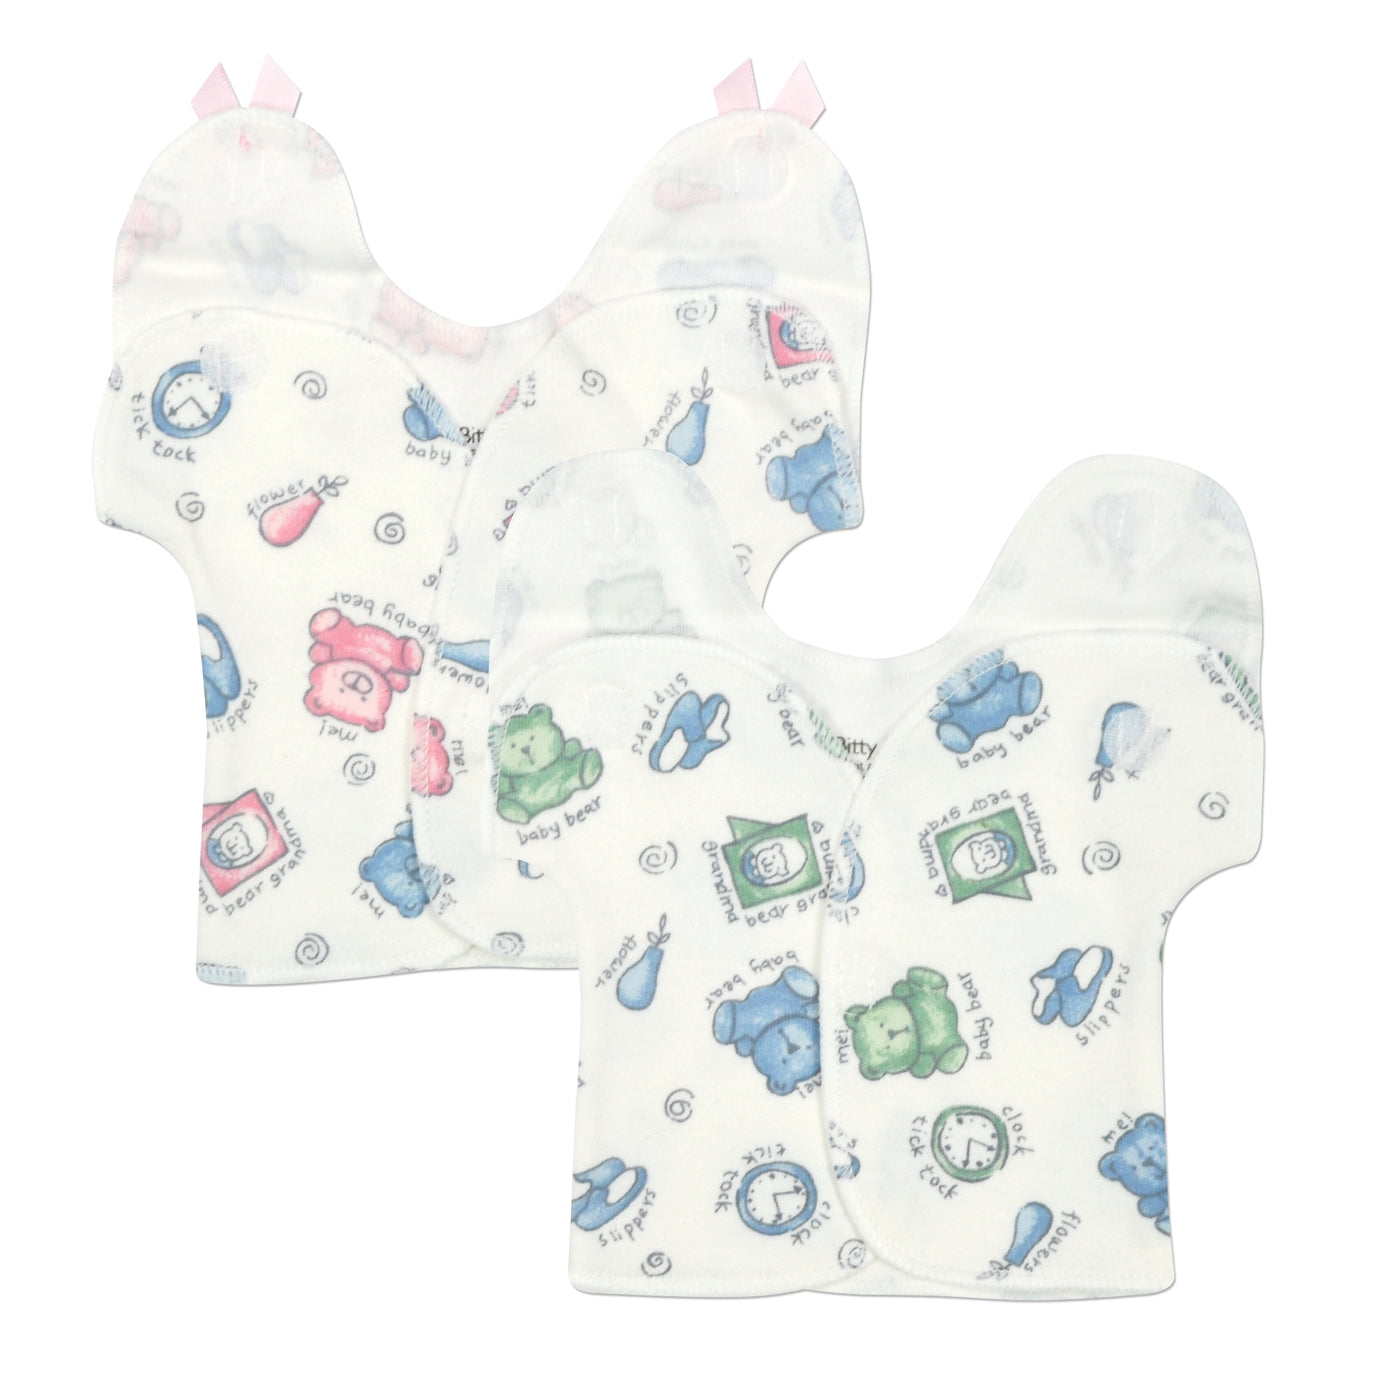 Baby Bears NICU Shirt 2 Pack Set